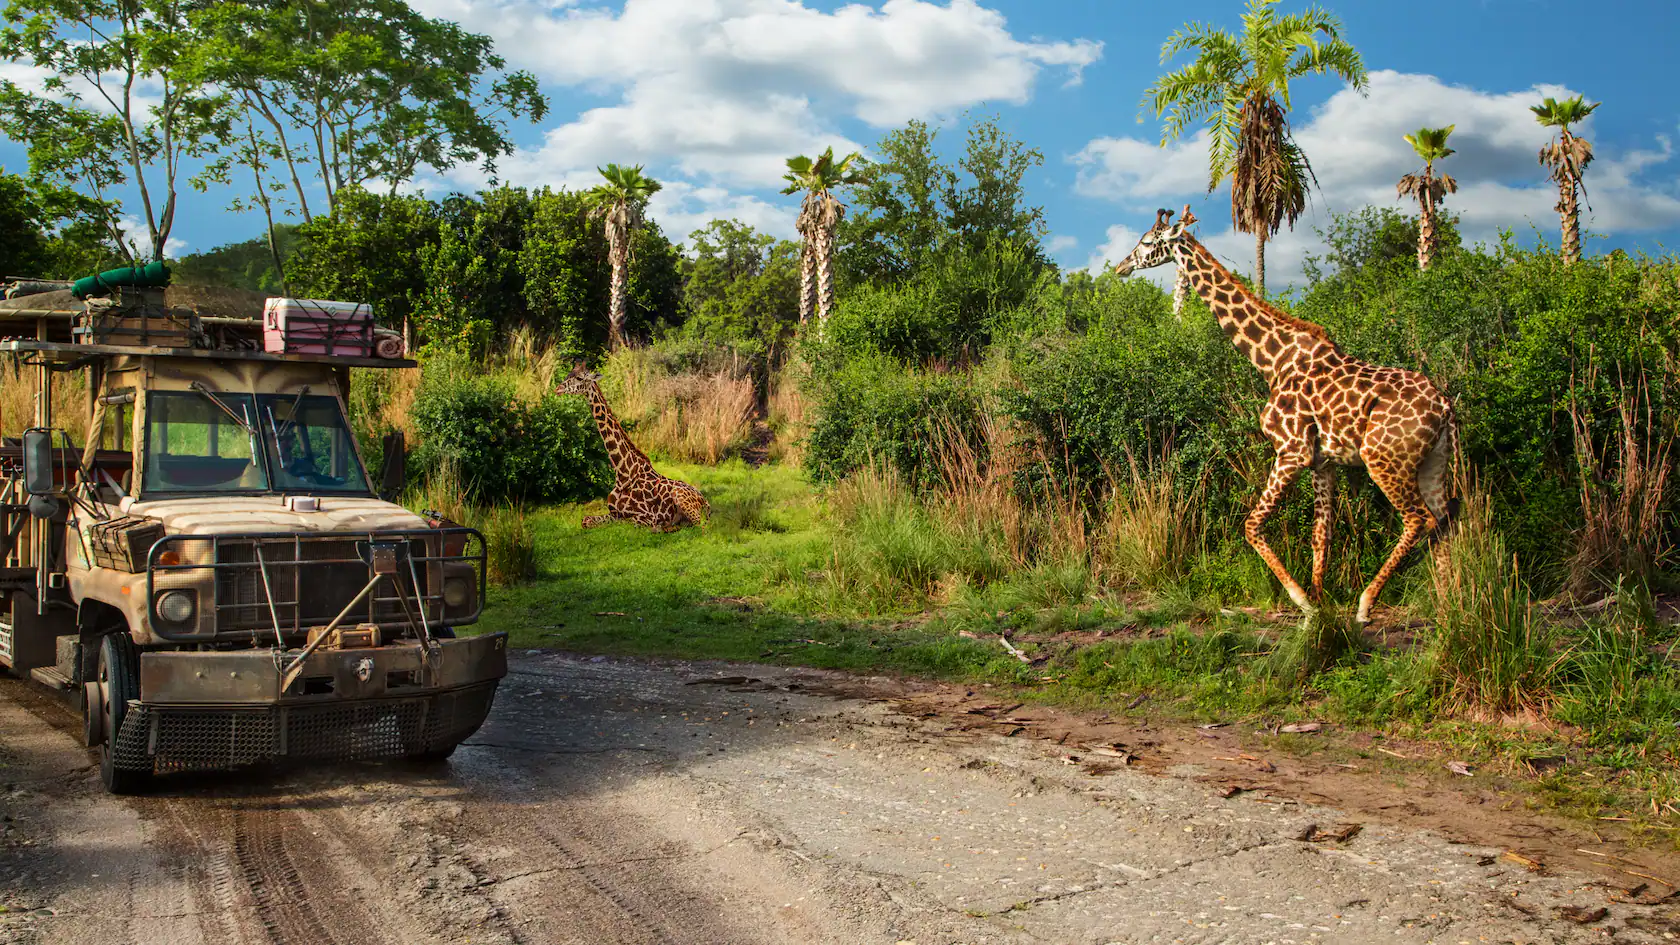 Kilimanjaro Safaris | Animal Kingdom Attractions | Walt Disney World Resort